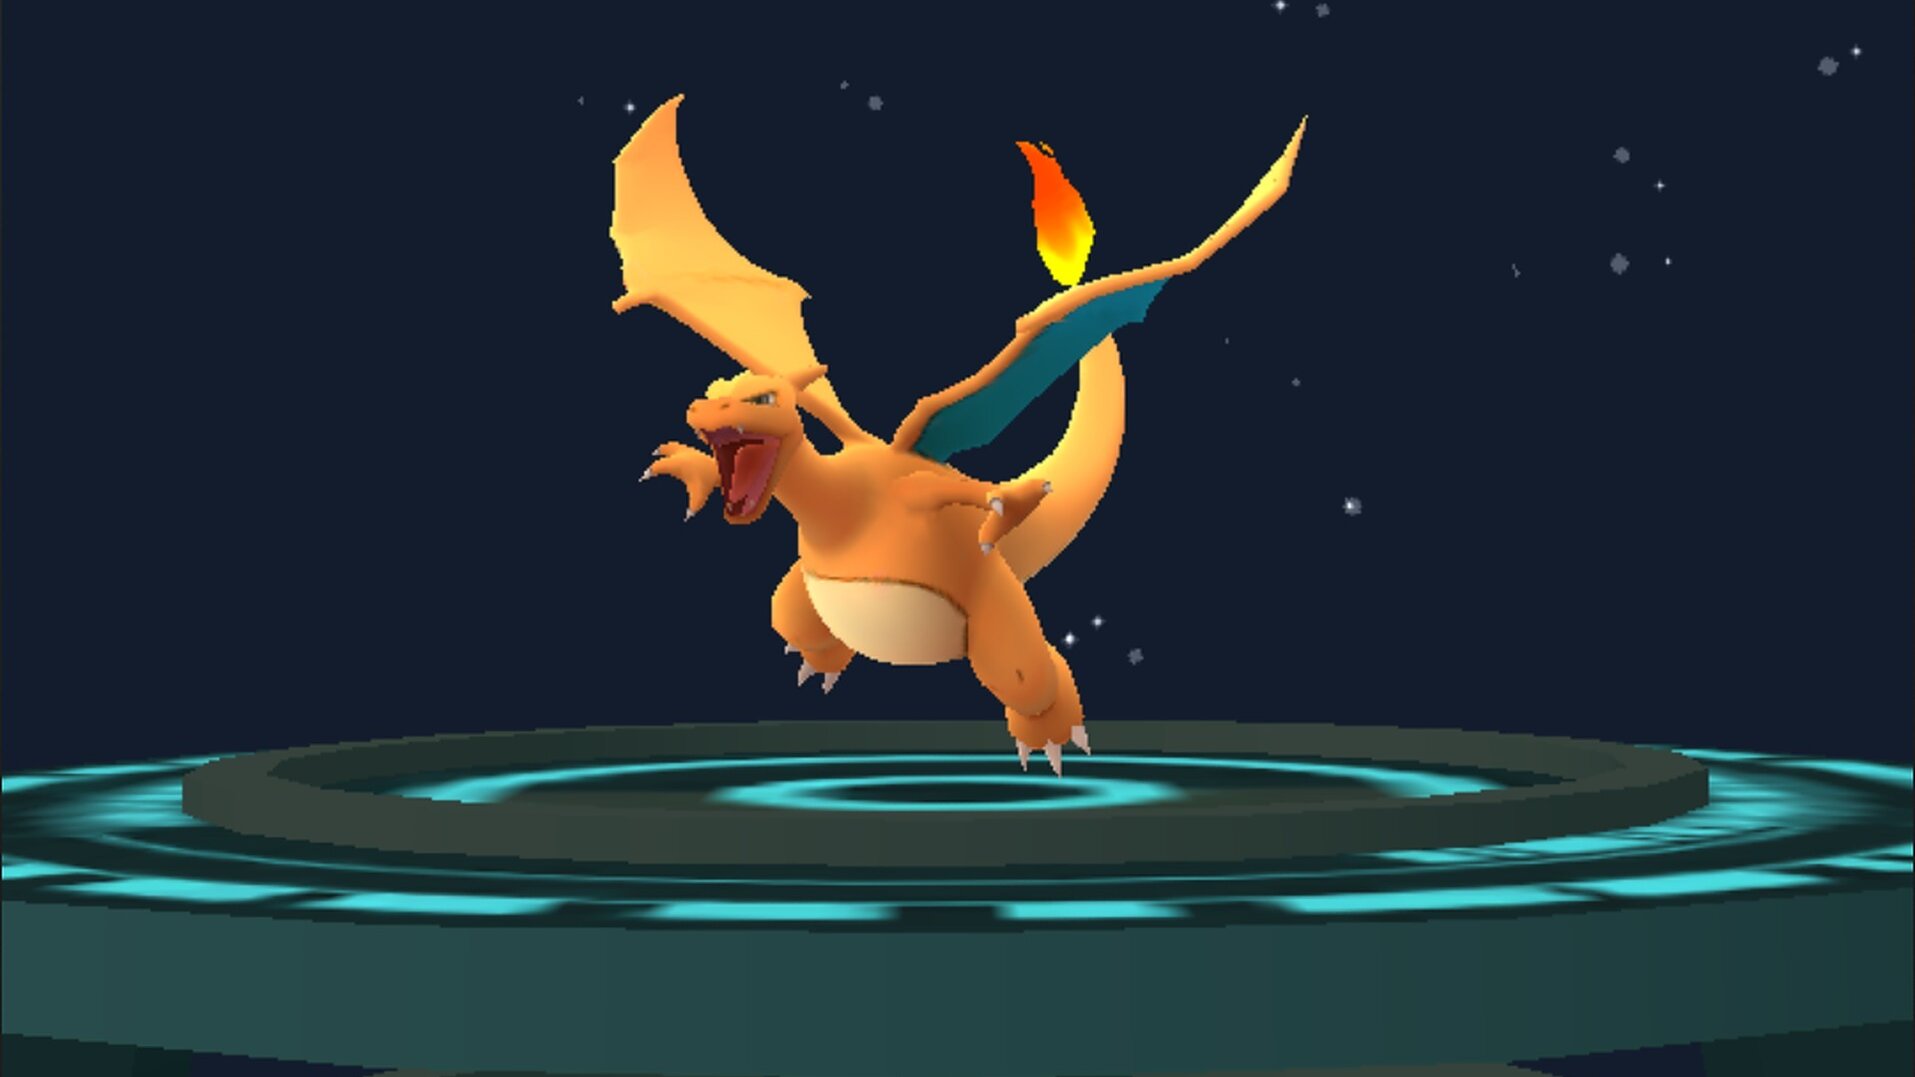 Charizard is one of the best flying type pokémon in Pokémon Go